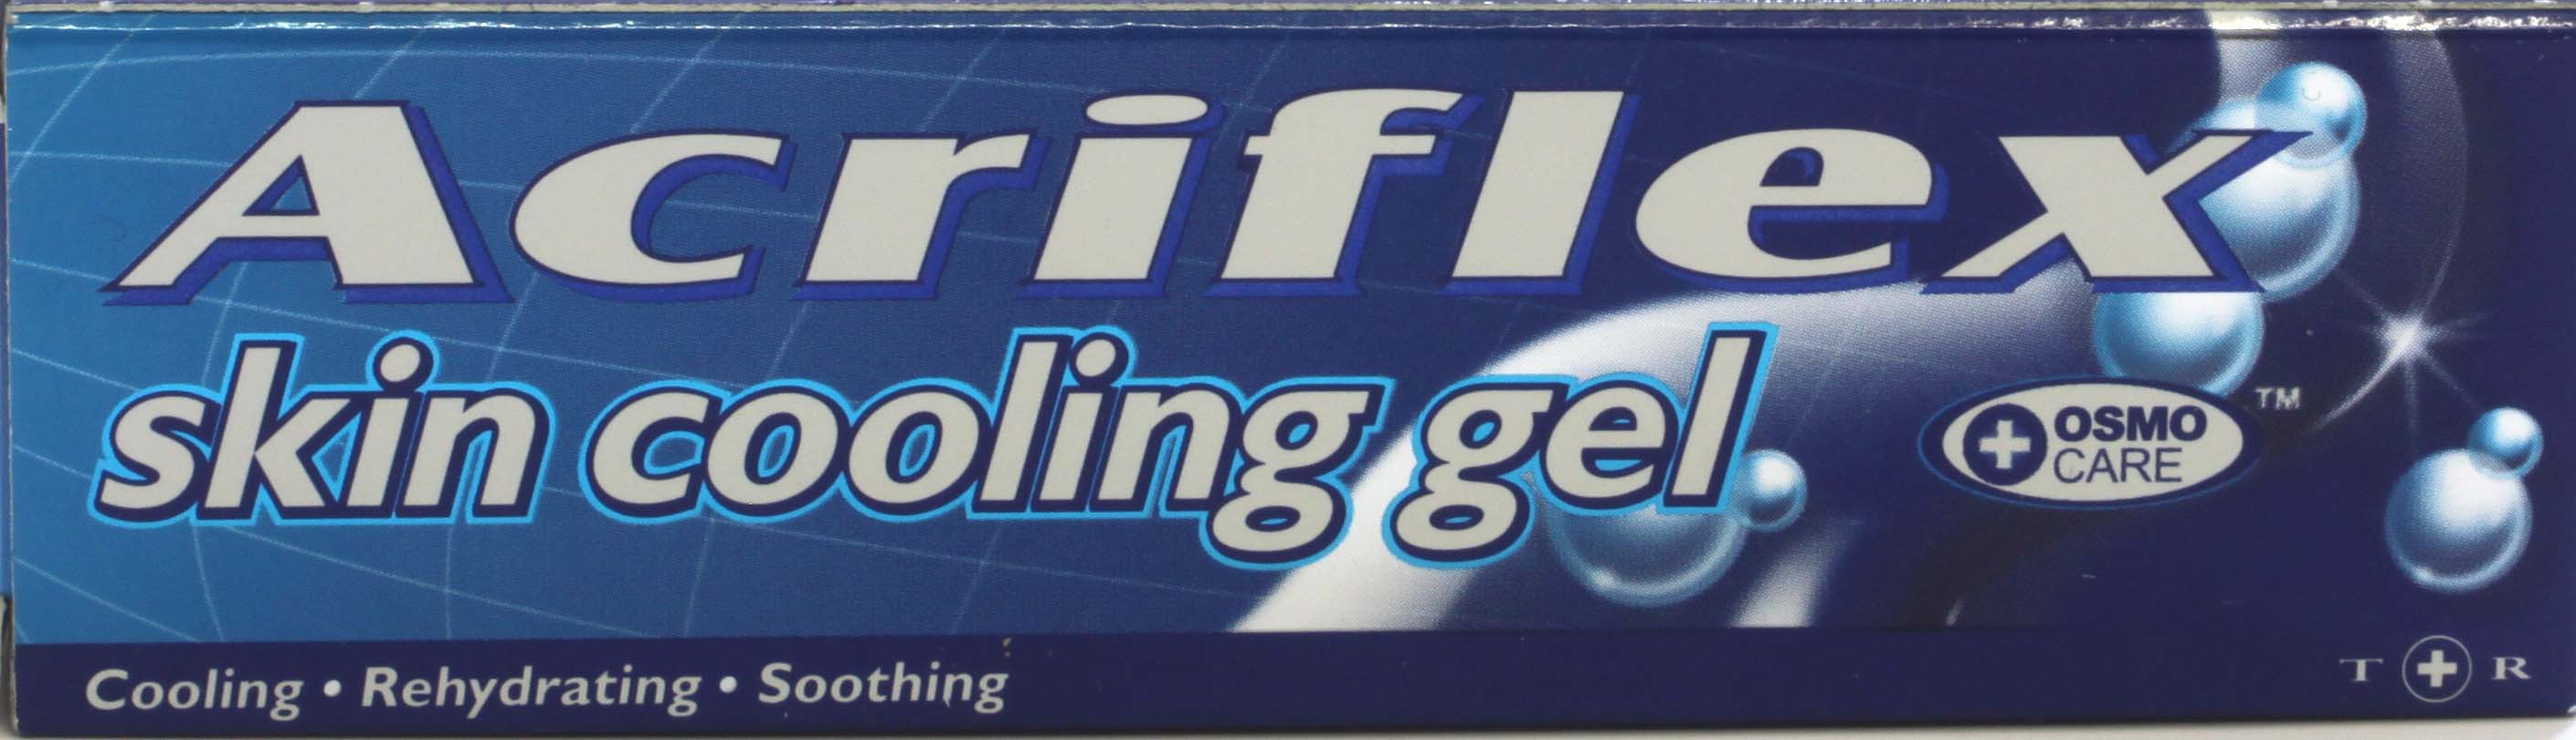 Acriflex Skin Cooling Gel - 30g